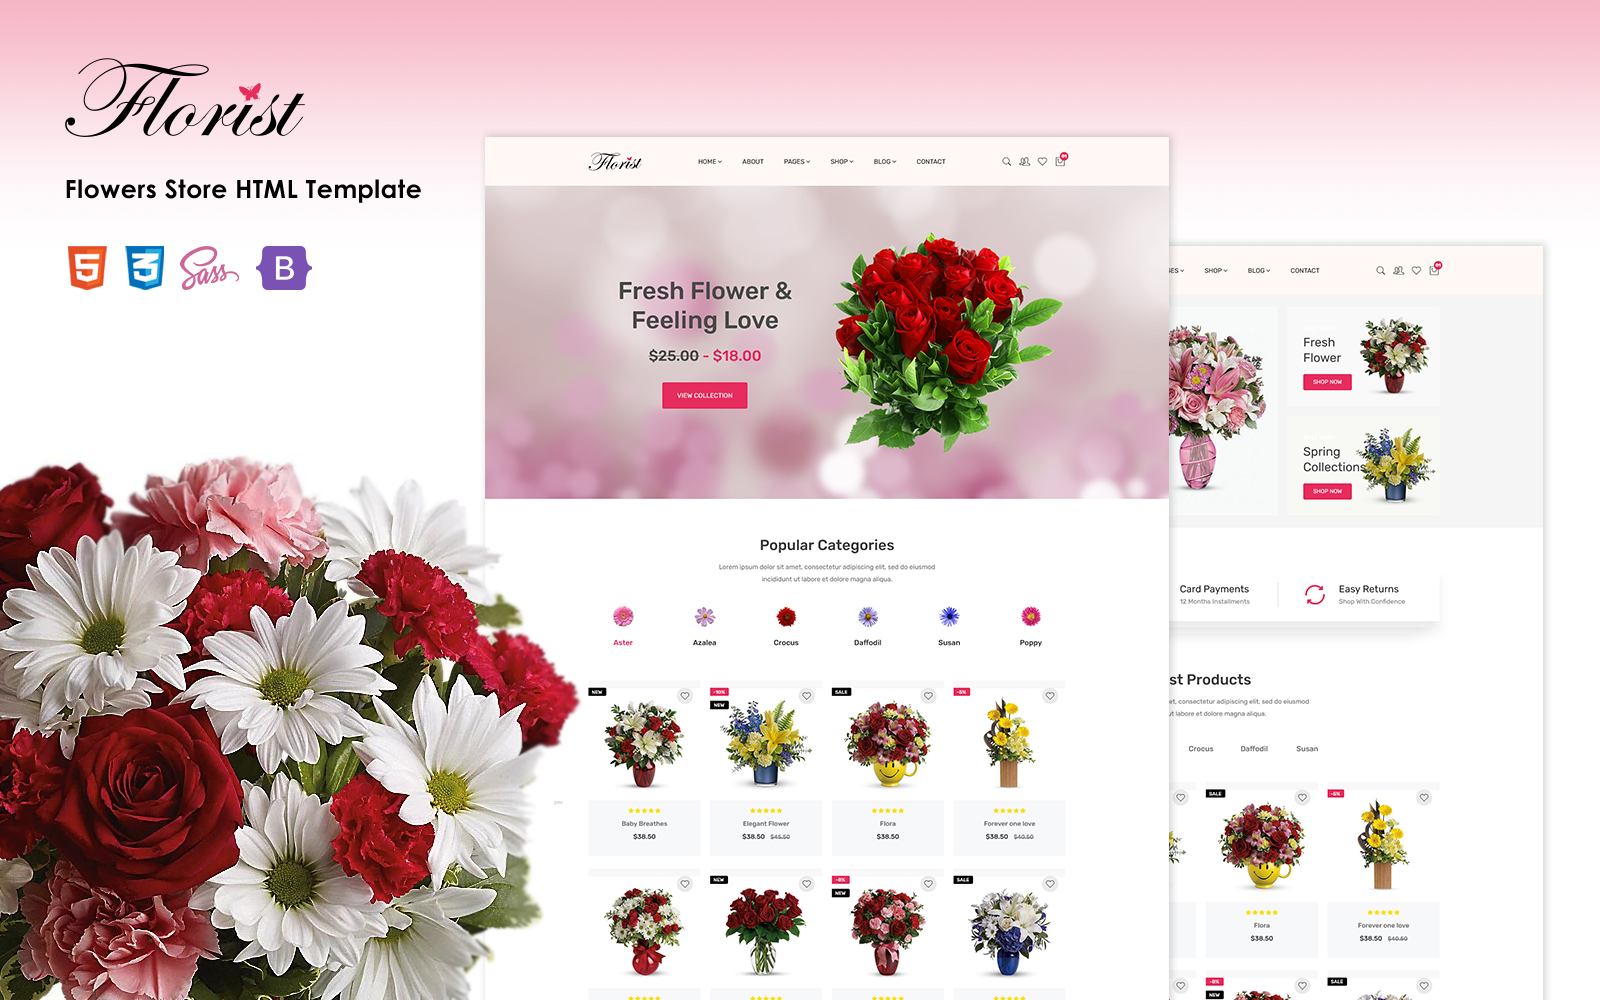 Florist - Flowers Store HTML Template